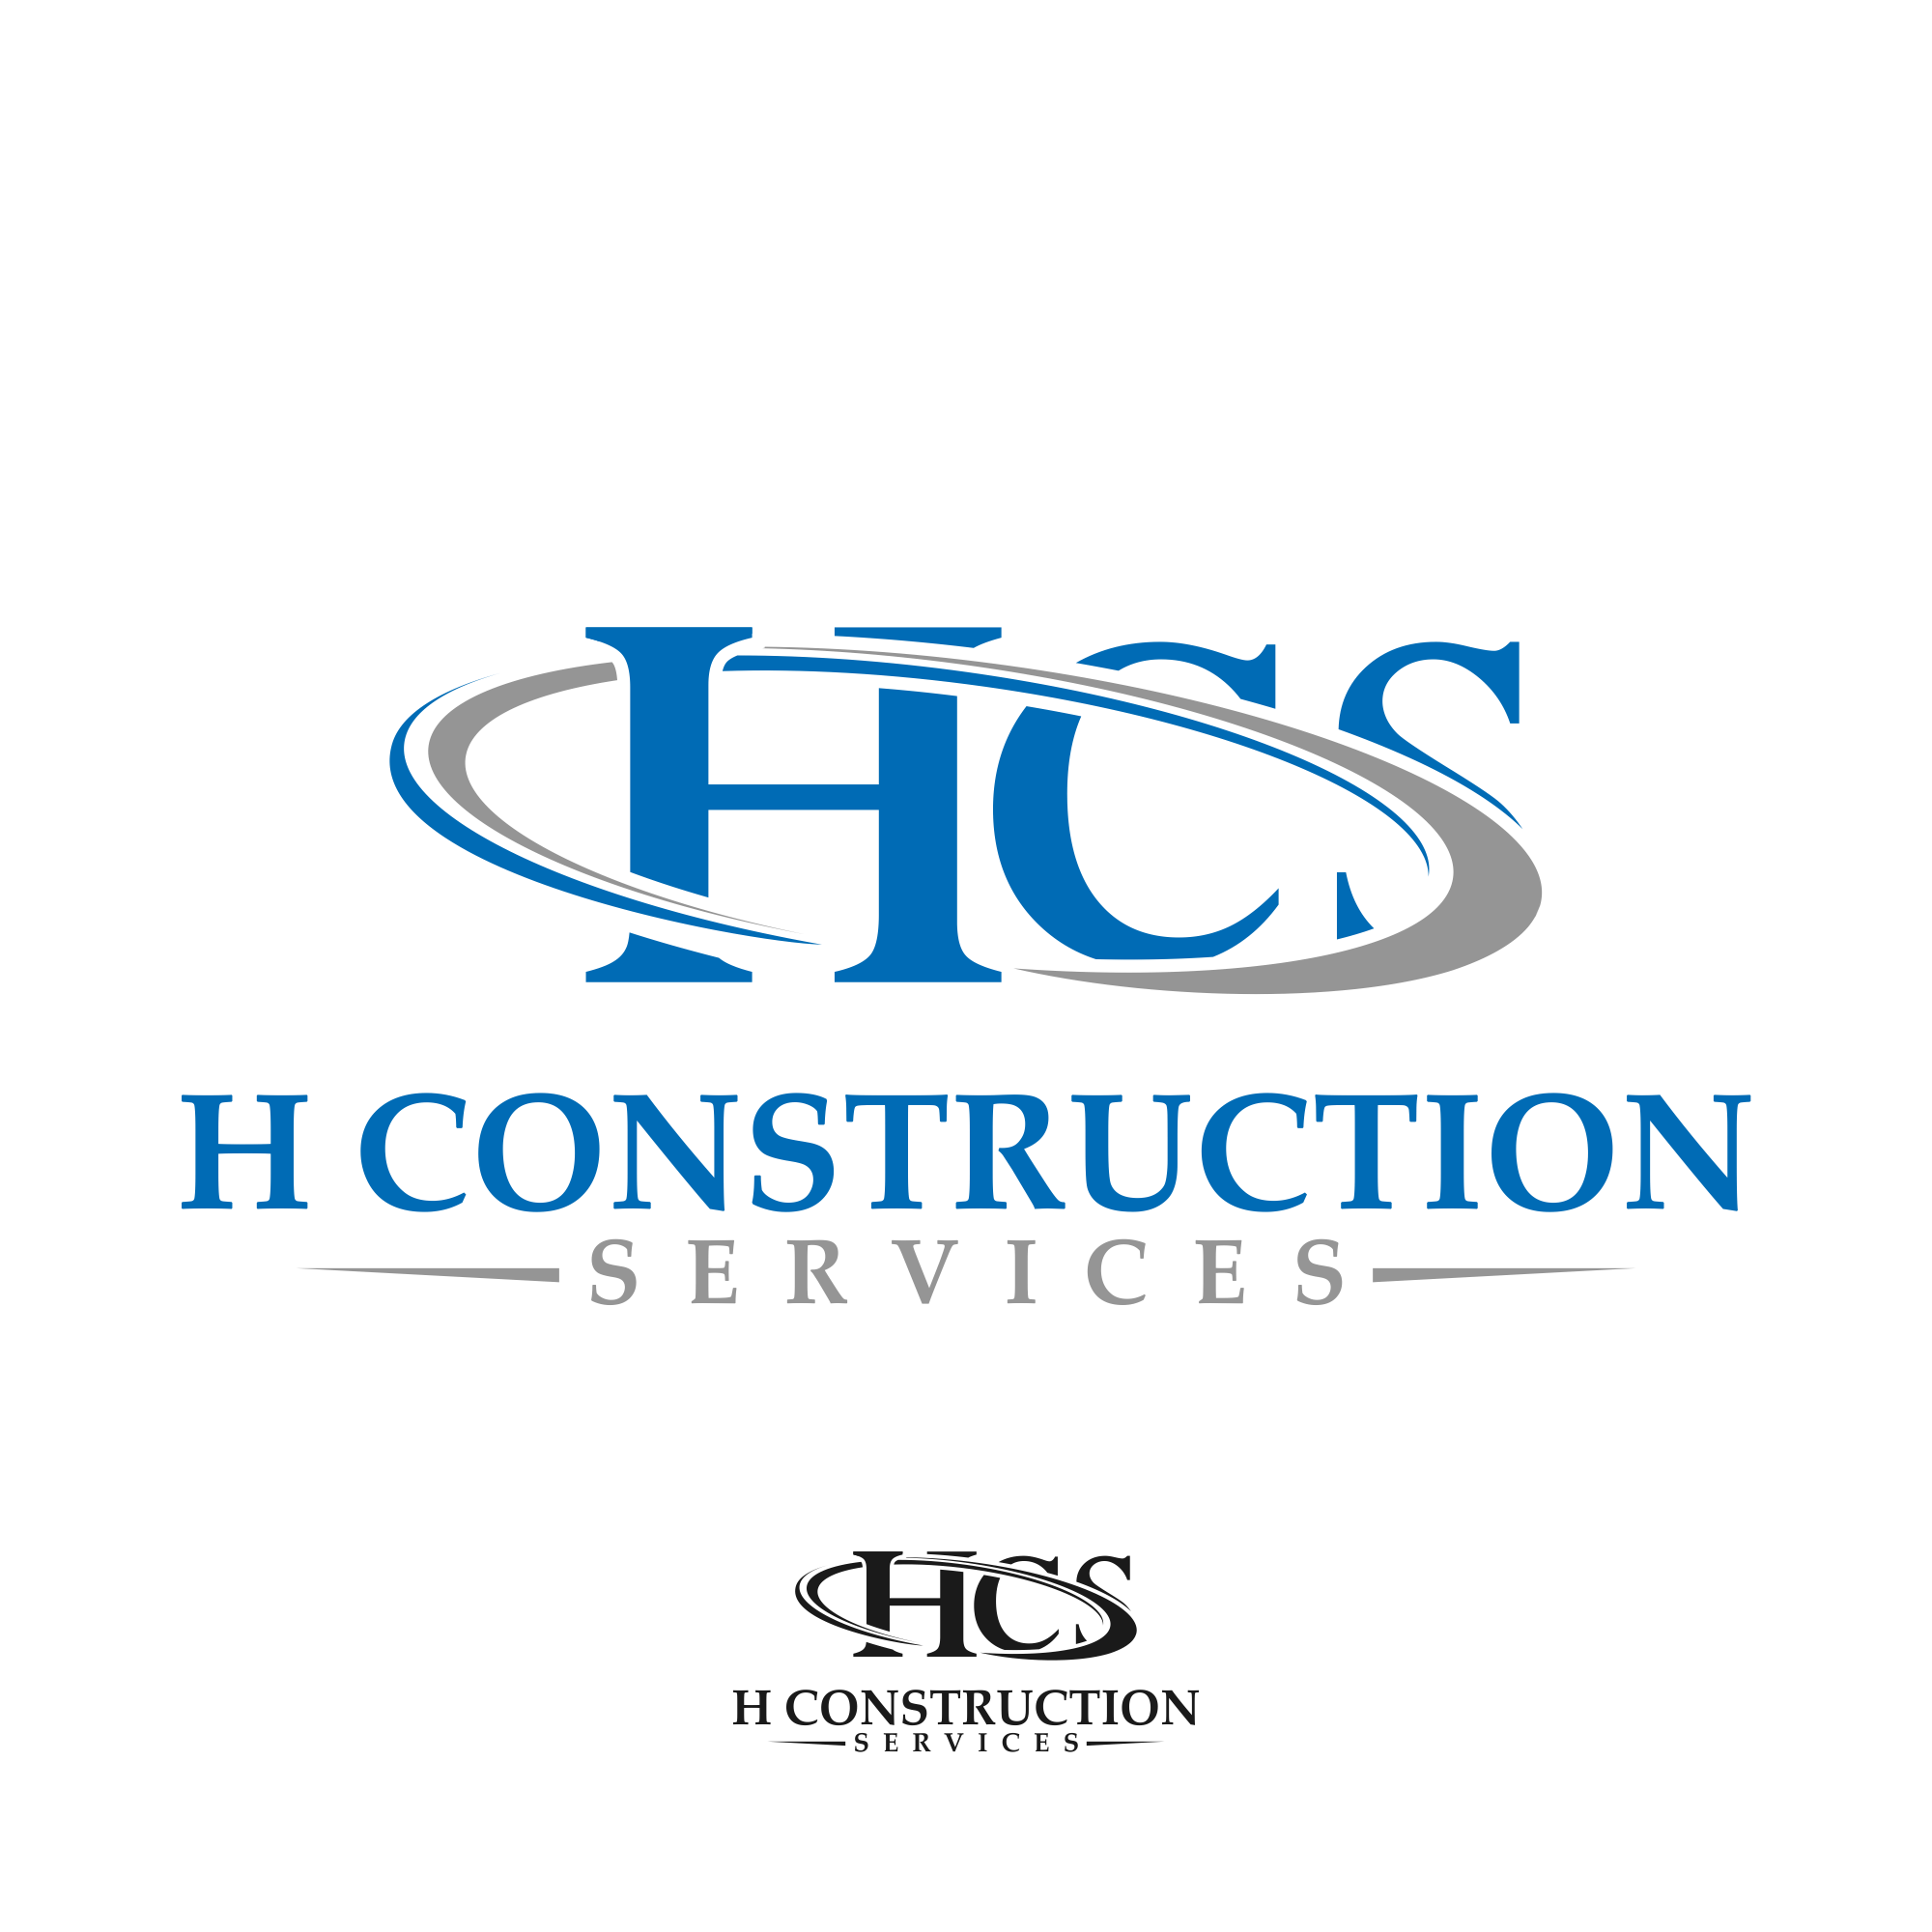 H Construction Logo - DesignContest - H Construction Services h-construction-services